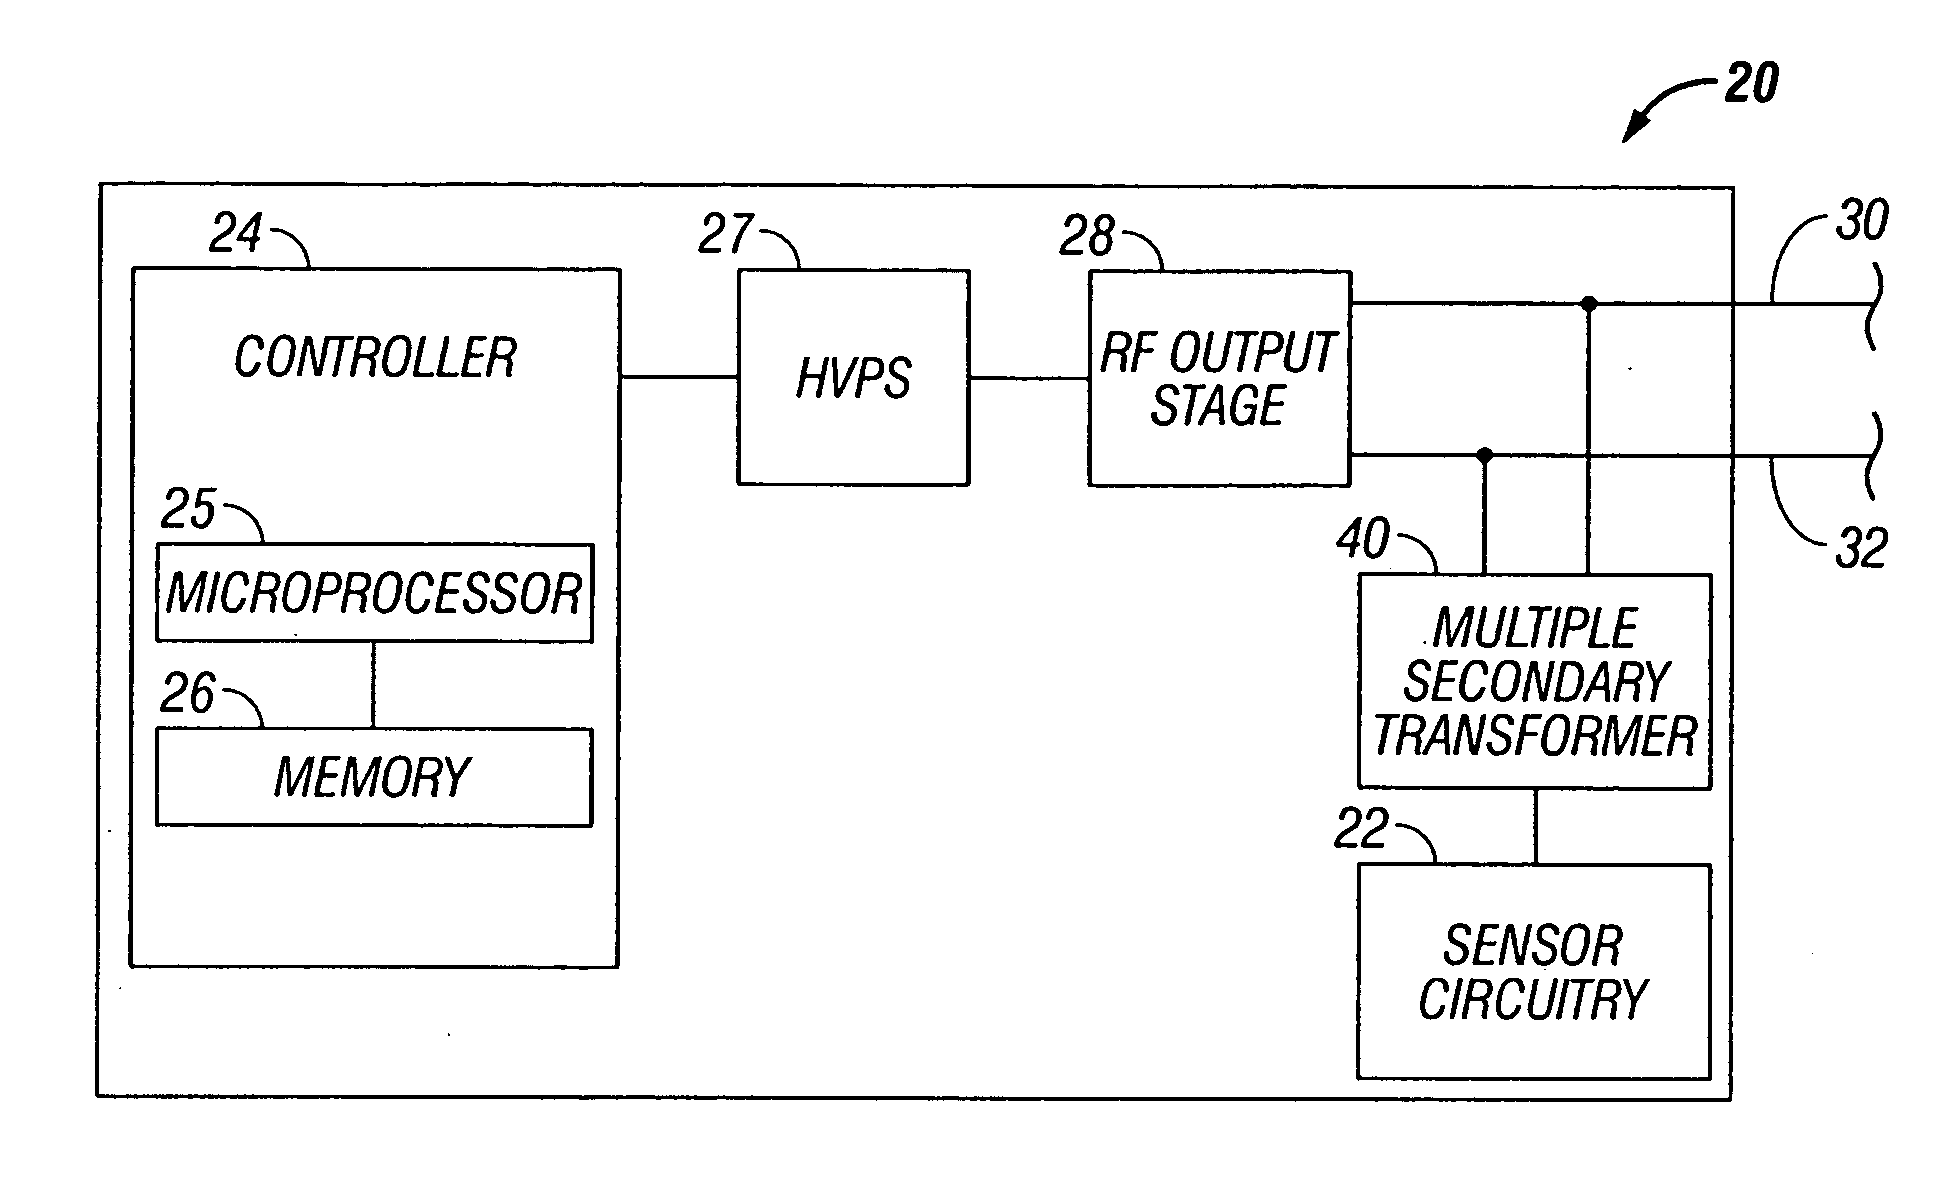 Transformer for RF voltage sensing